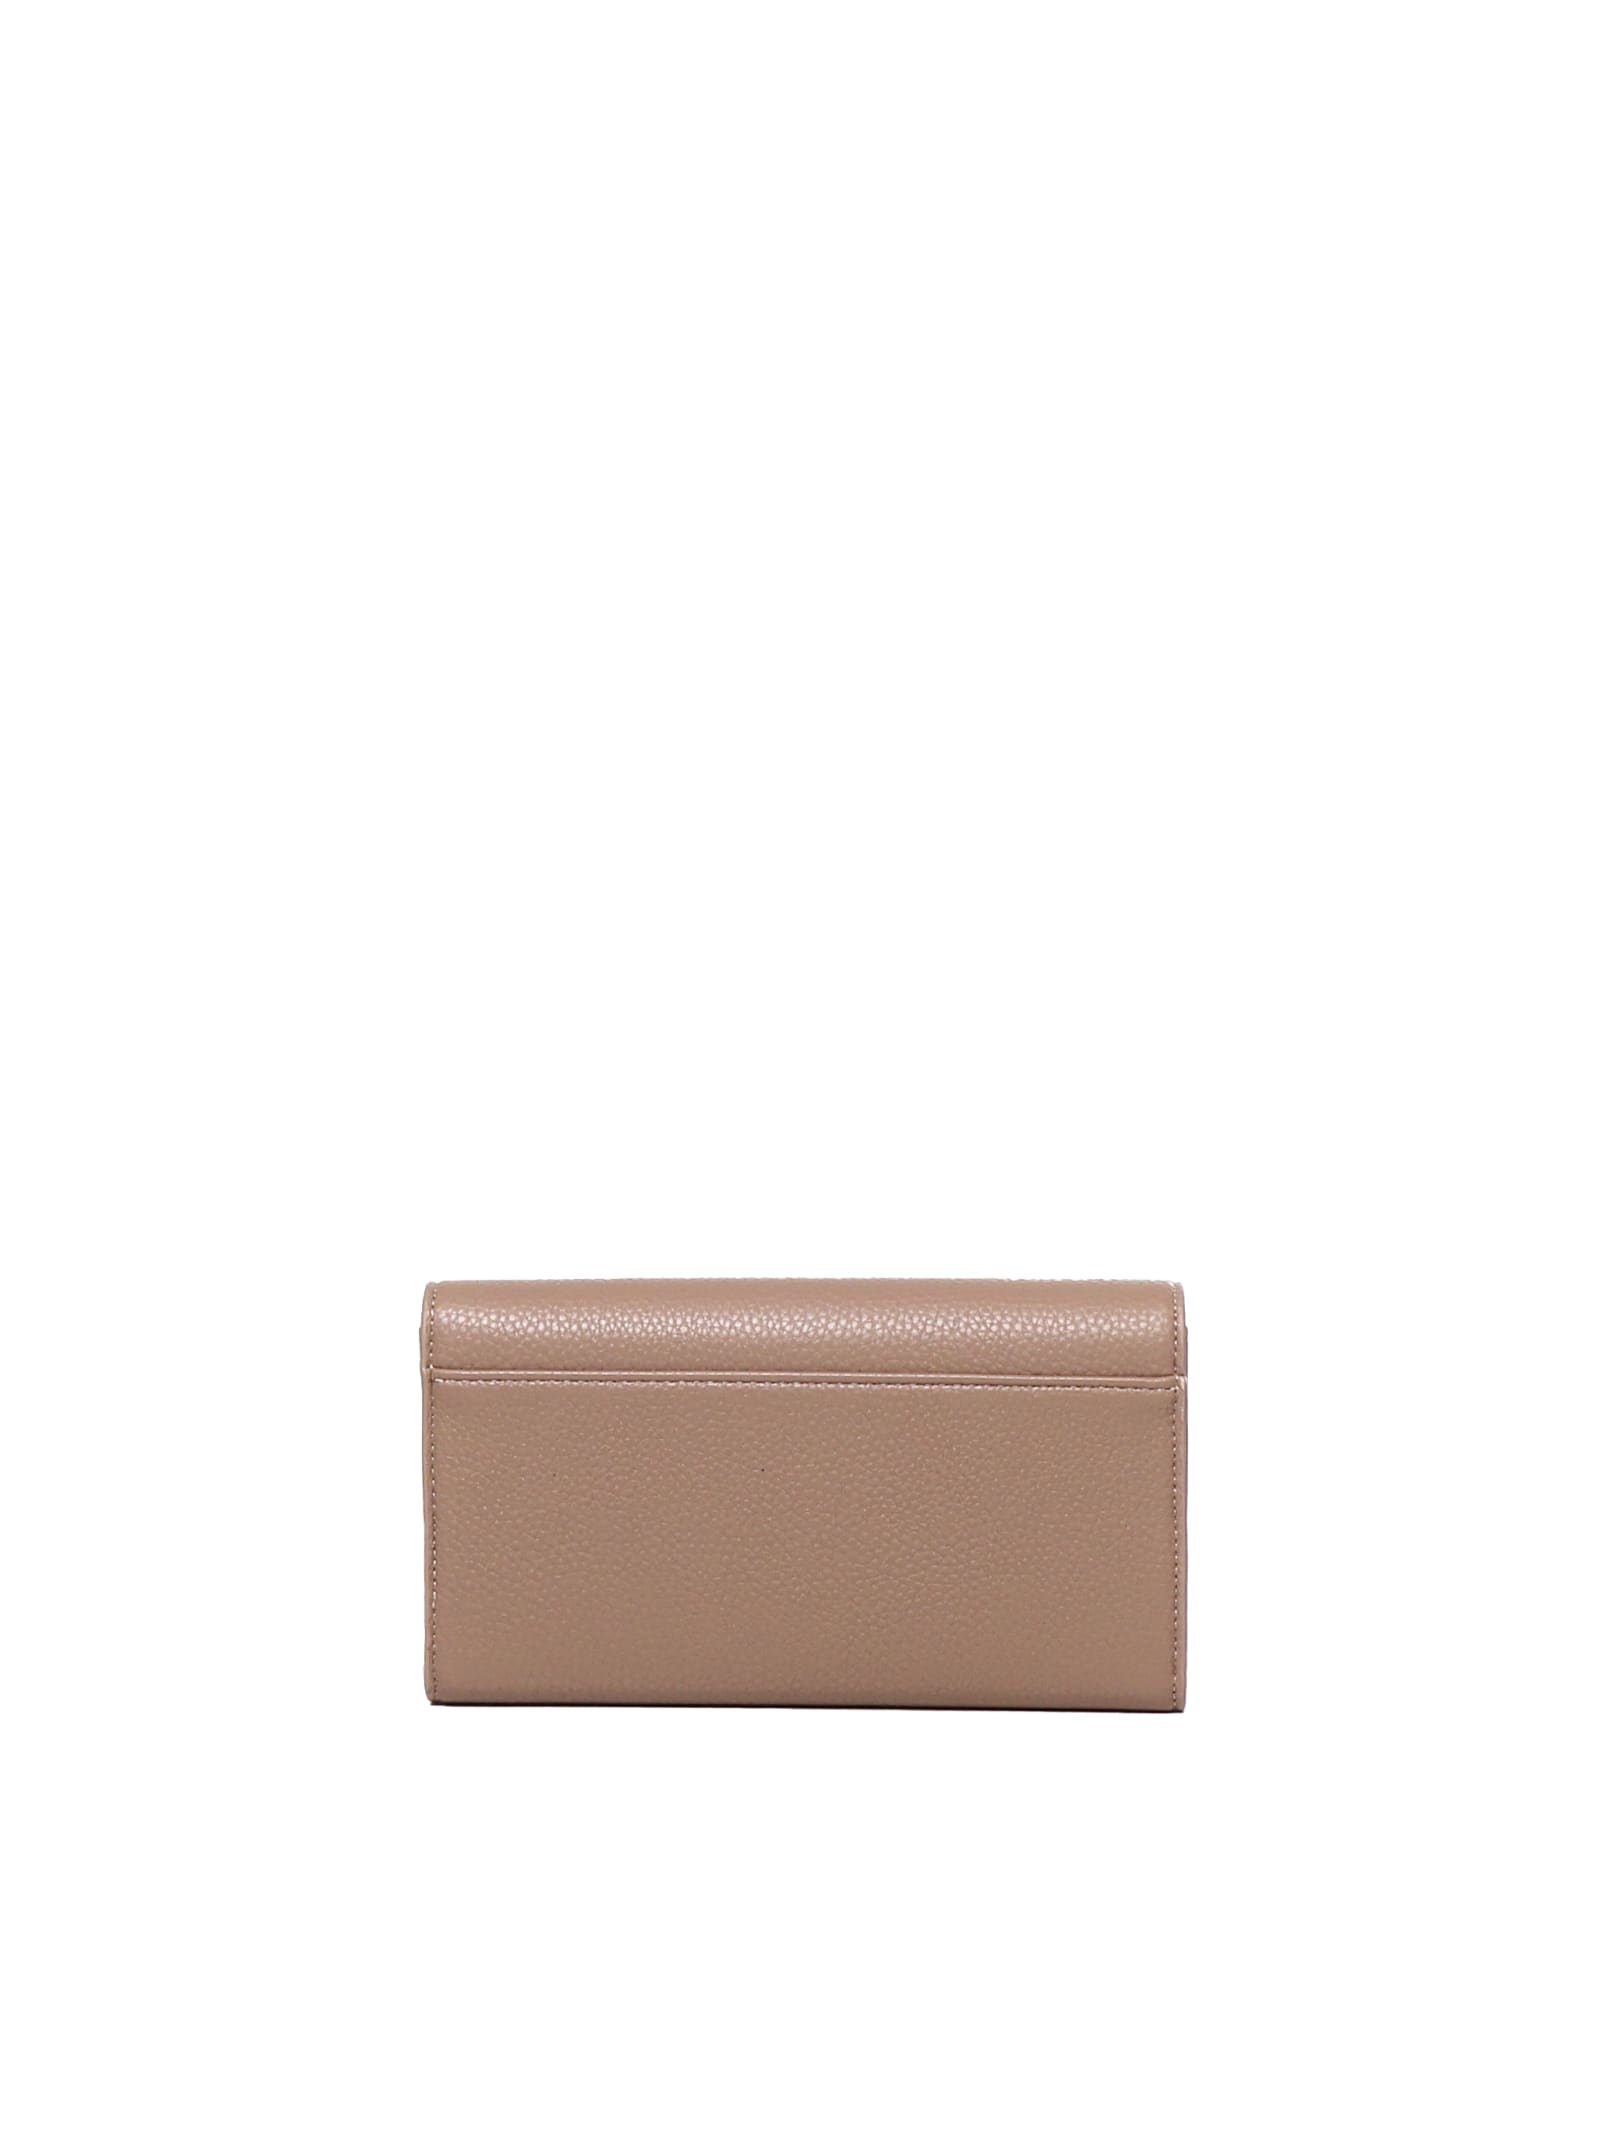 Shop V73 Visia Wallet In Eco-leather In Beige